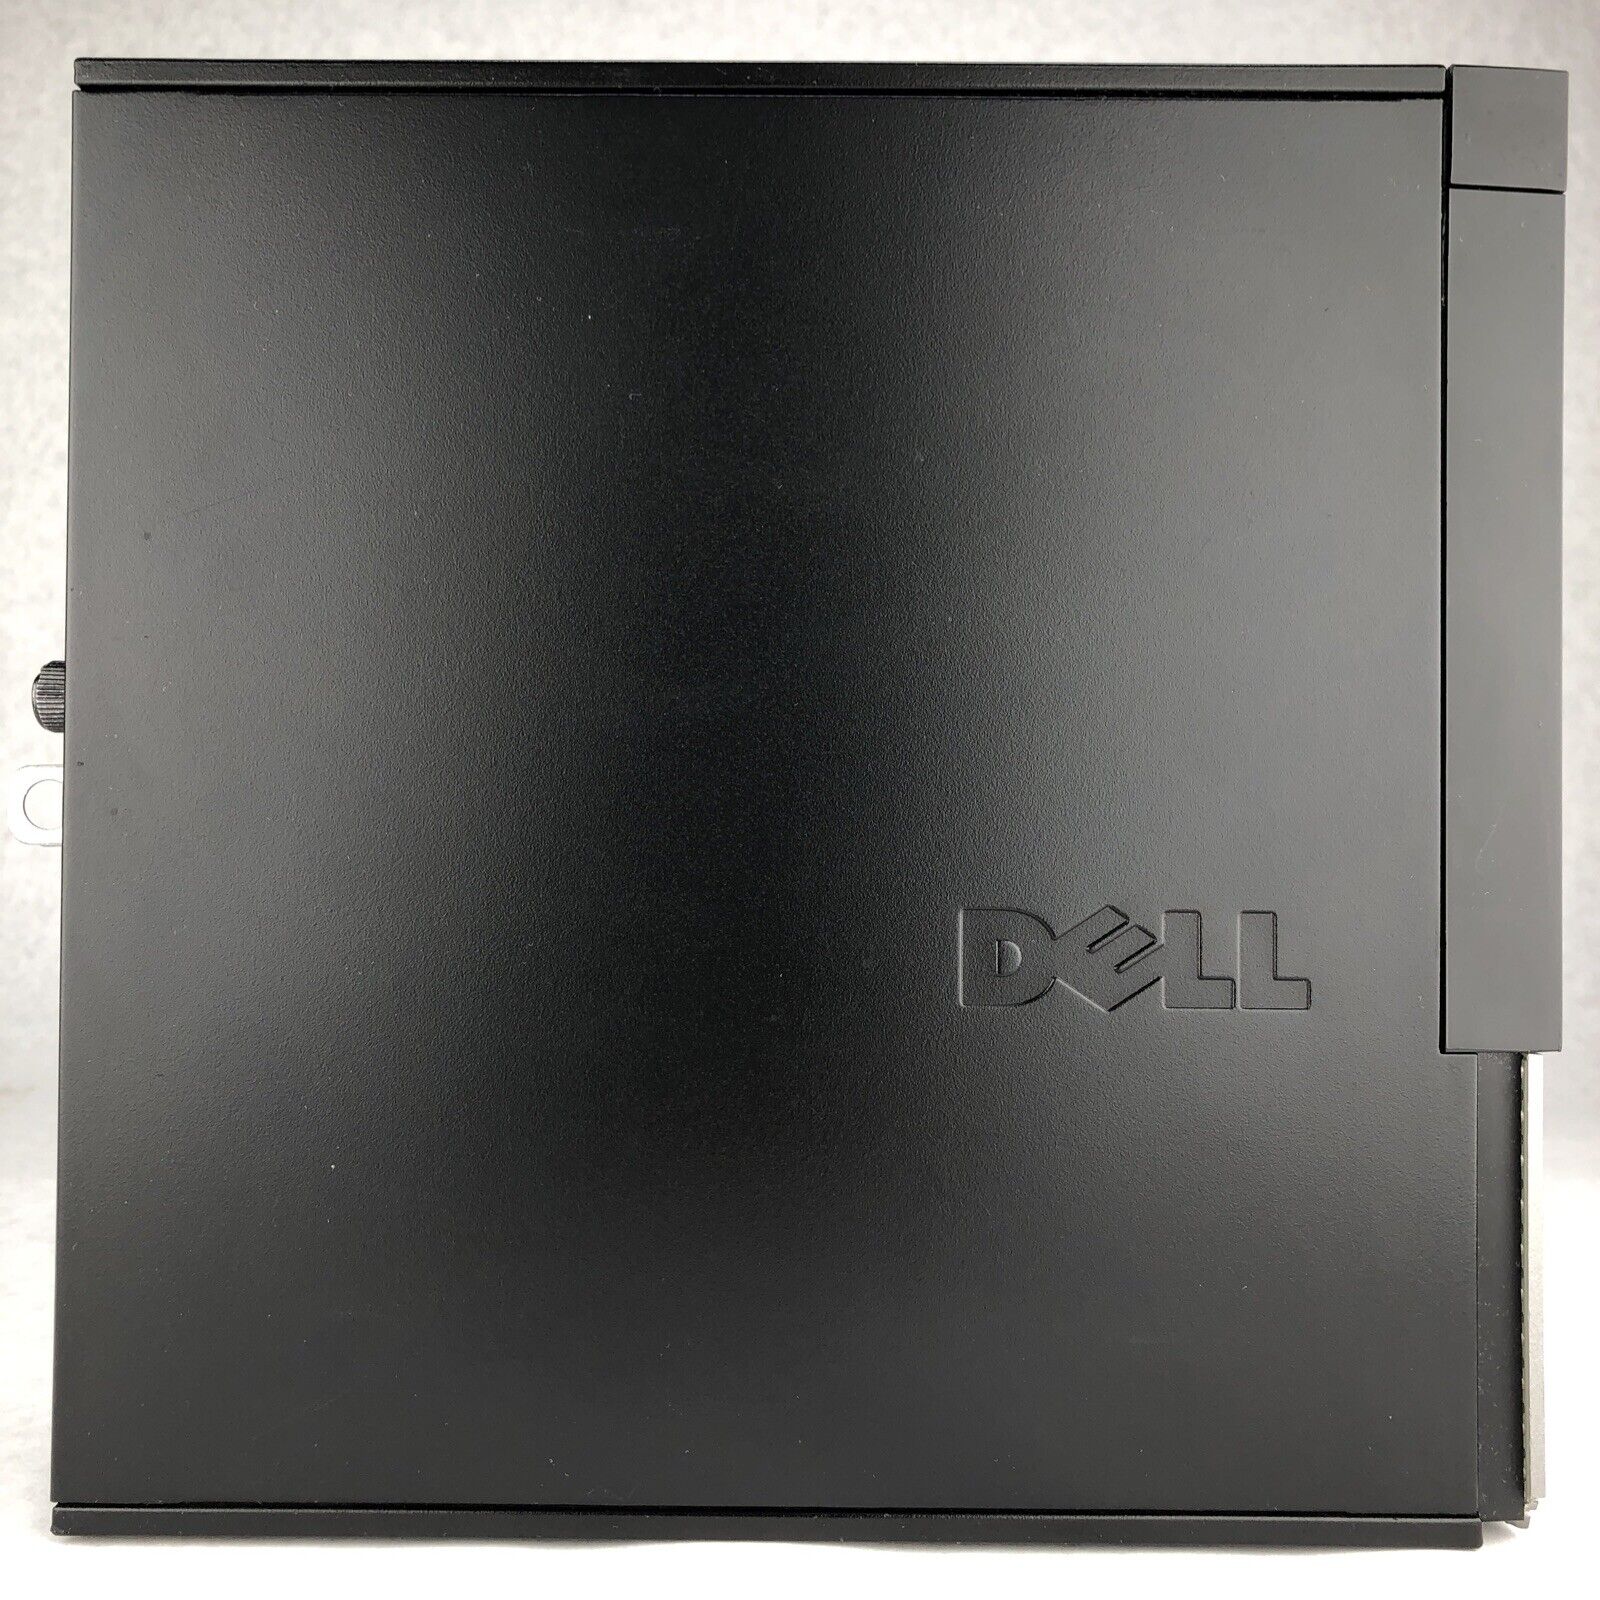 Dell Optiplex 7010 USFF Intel Core i3-3220 3.30GHz CPU 2GB RAM No HDD No OS